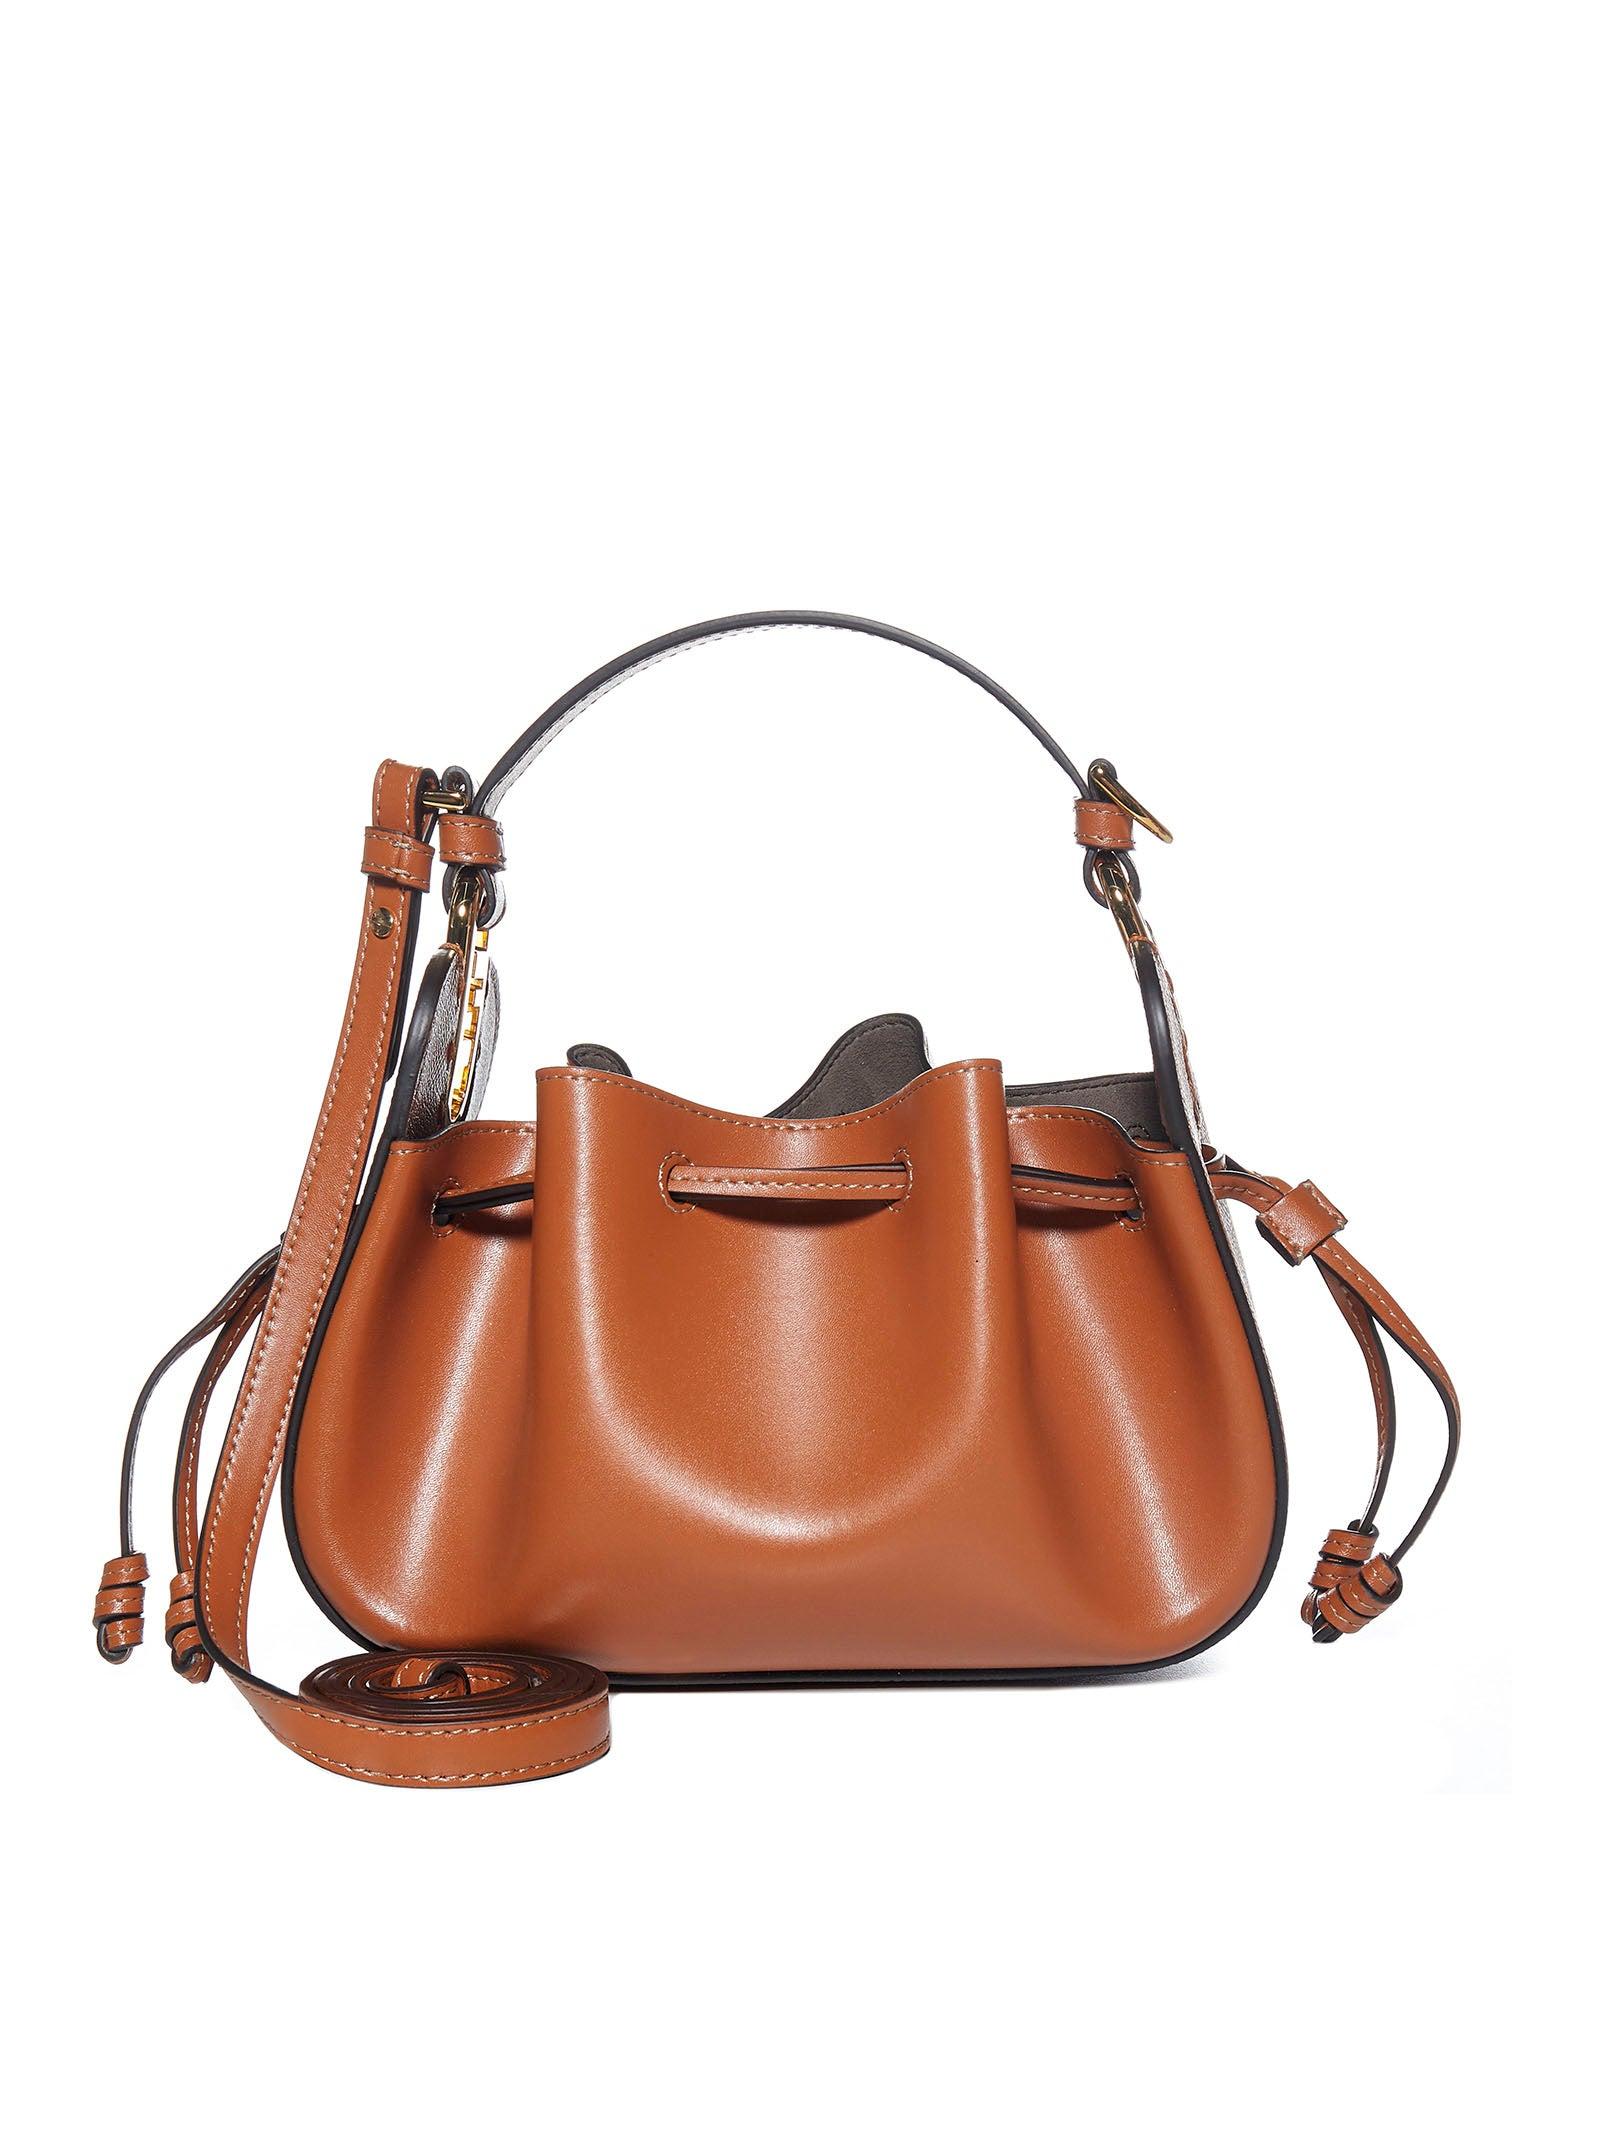 Fendi Leather Pomodorino Mini Bucket Bag in Brown - Lyst